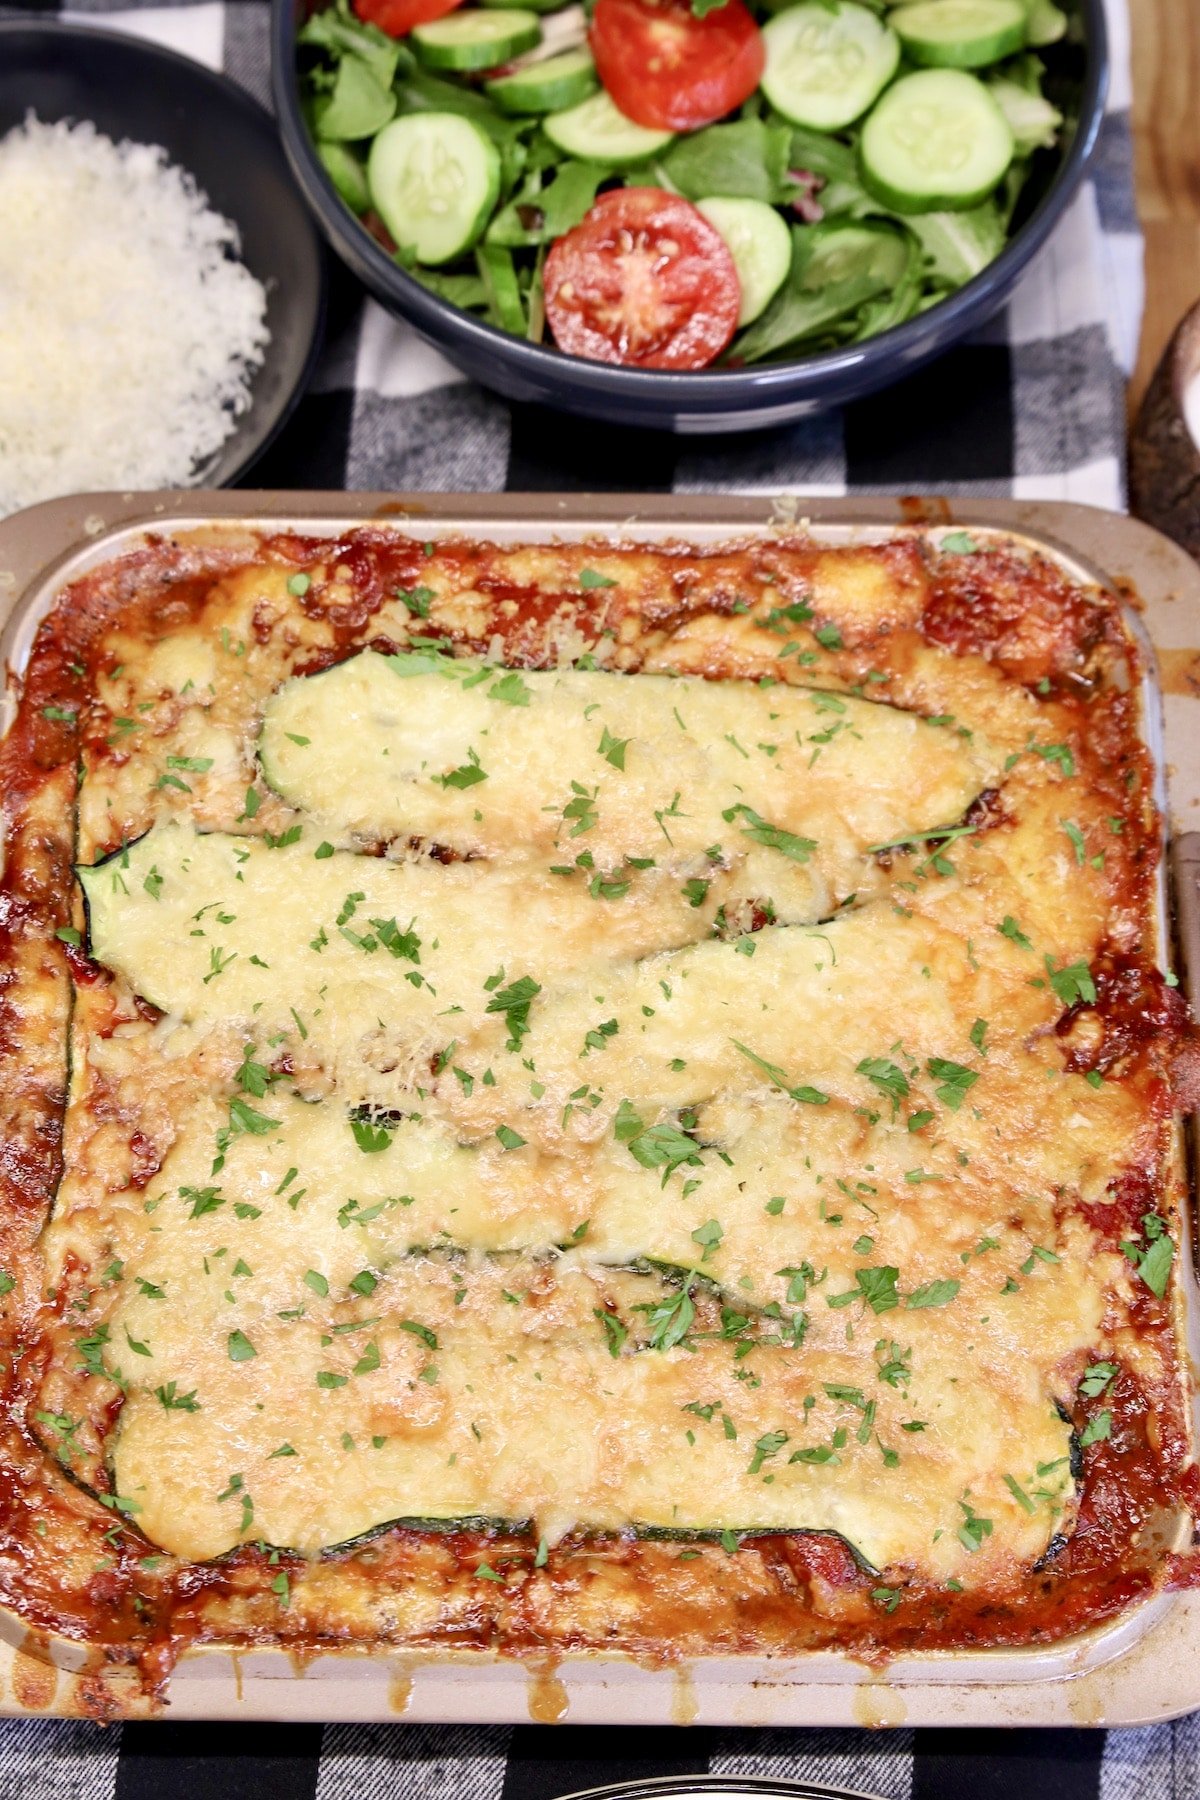 Zucchini lasagna in a pan, bowl of salad.